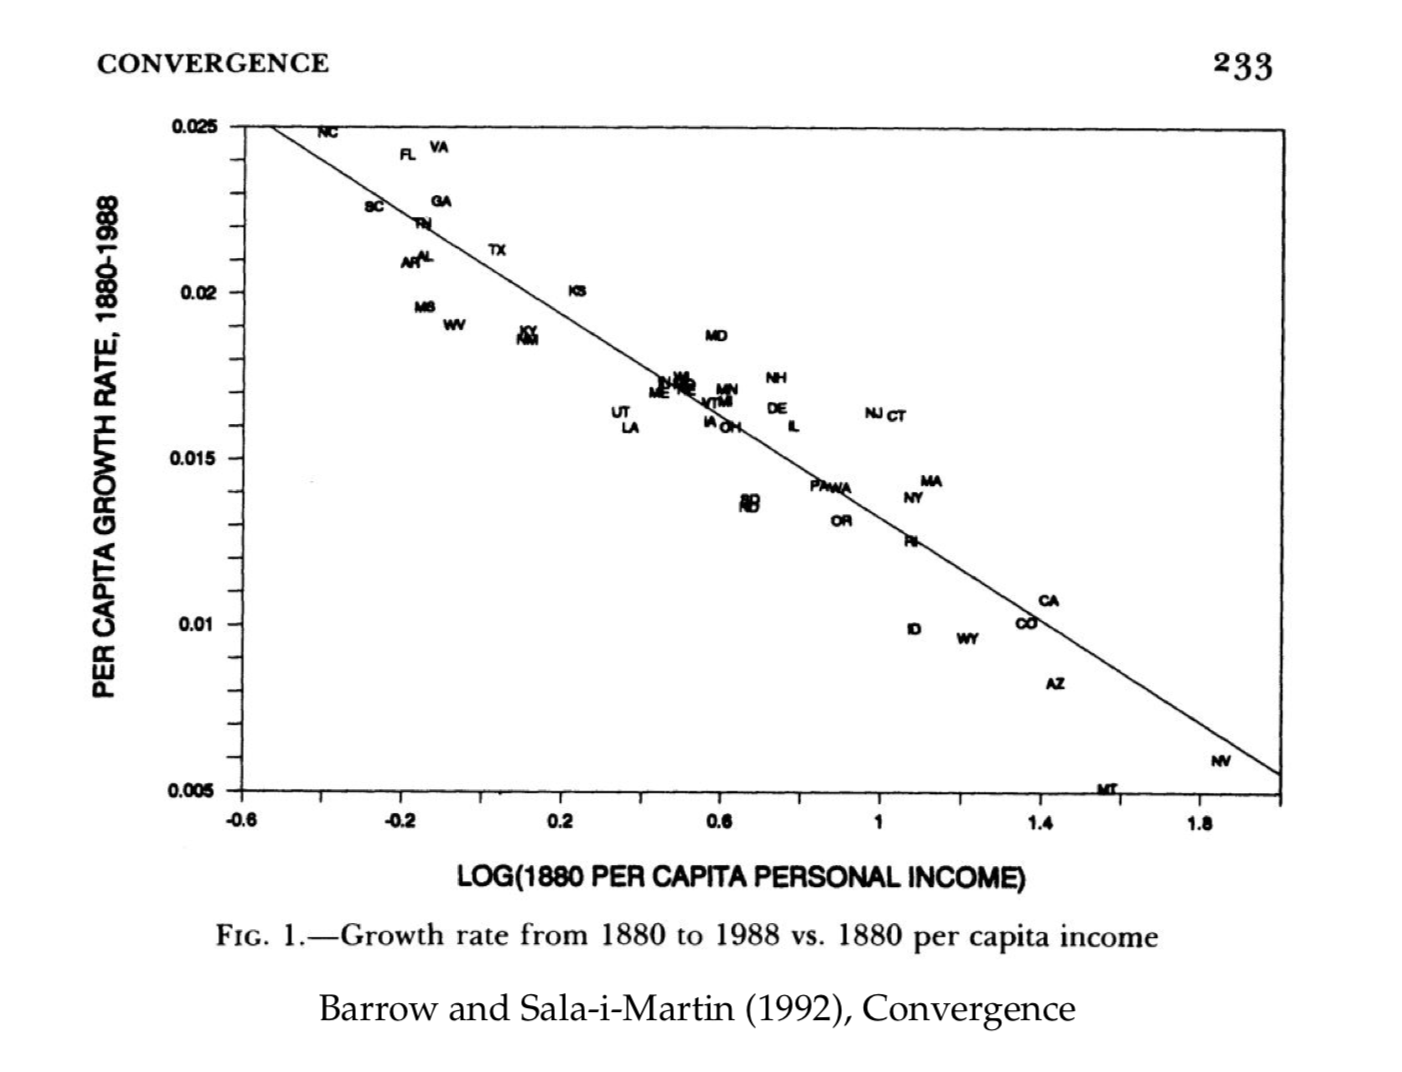 233
CONVERGENCE
0.025
GA
TX
ARL
0.02
MD
DE
L
UT
LA
NJ CT
0.015
MA
NY
PAWA
AB
CA
0.01
WY
AZ
0.005
-0.6
-0.2
0.2
O.6
1
1.4
1.8
LOG(1880 PER CAPITA PERSONAL INCOME)
FIG. 1-Growth rate from 1880 to 1988 vs. 1880 per capita income
Barrow and Sala-i-Martin (1992), Convergence
PER CAPITA GROWTH RATE, 1880-1988
